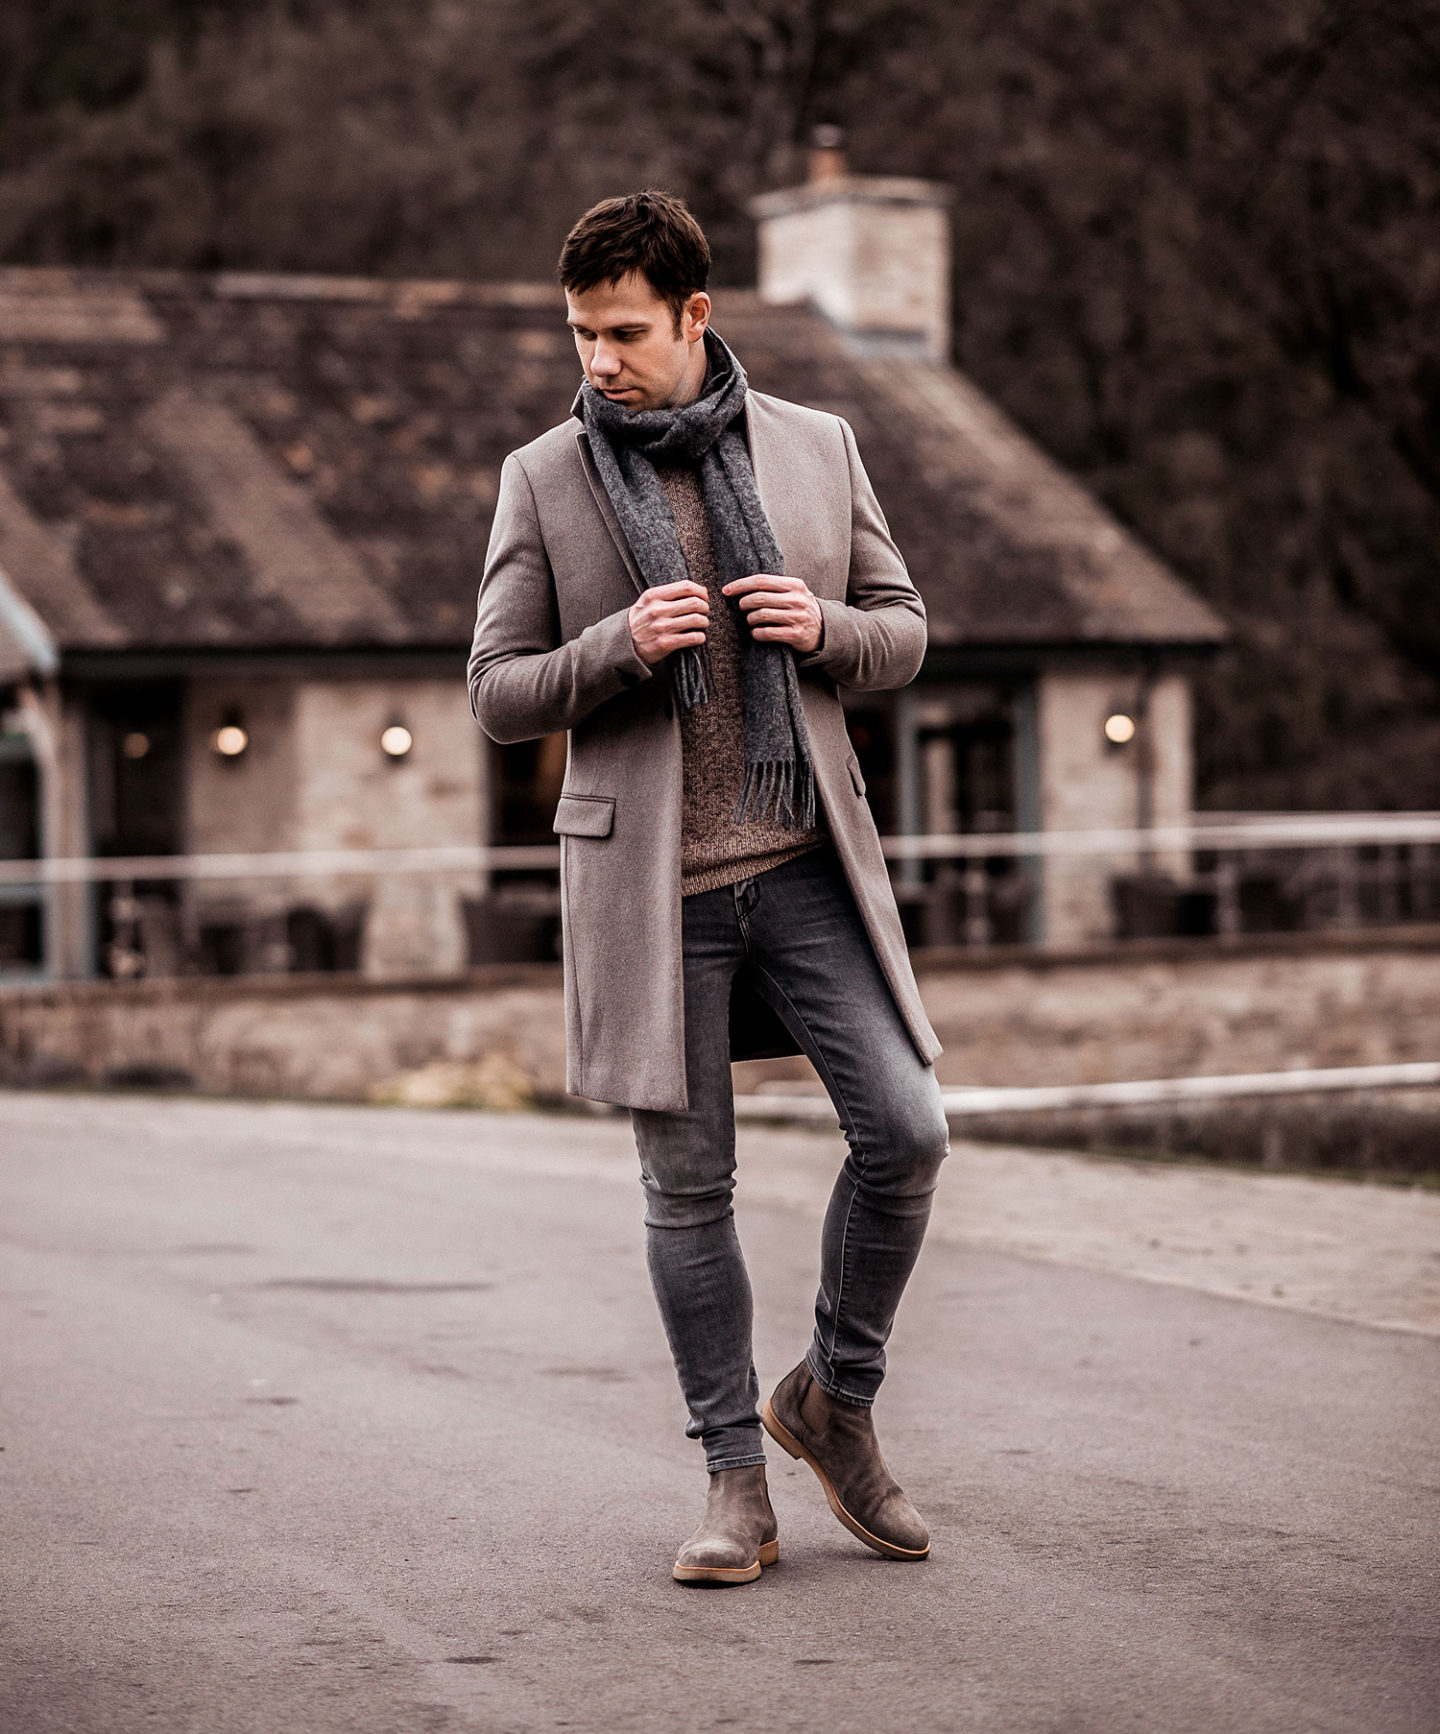 Allsaints Monochrome Grey Tones Winter Outfit - Your Average Guy